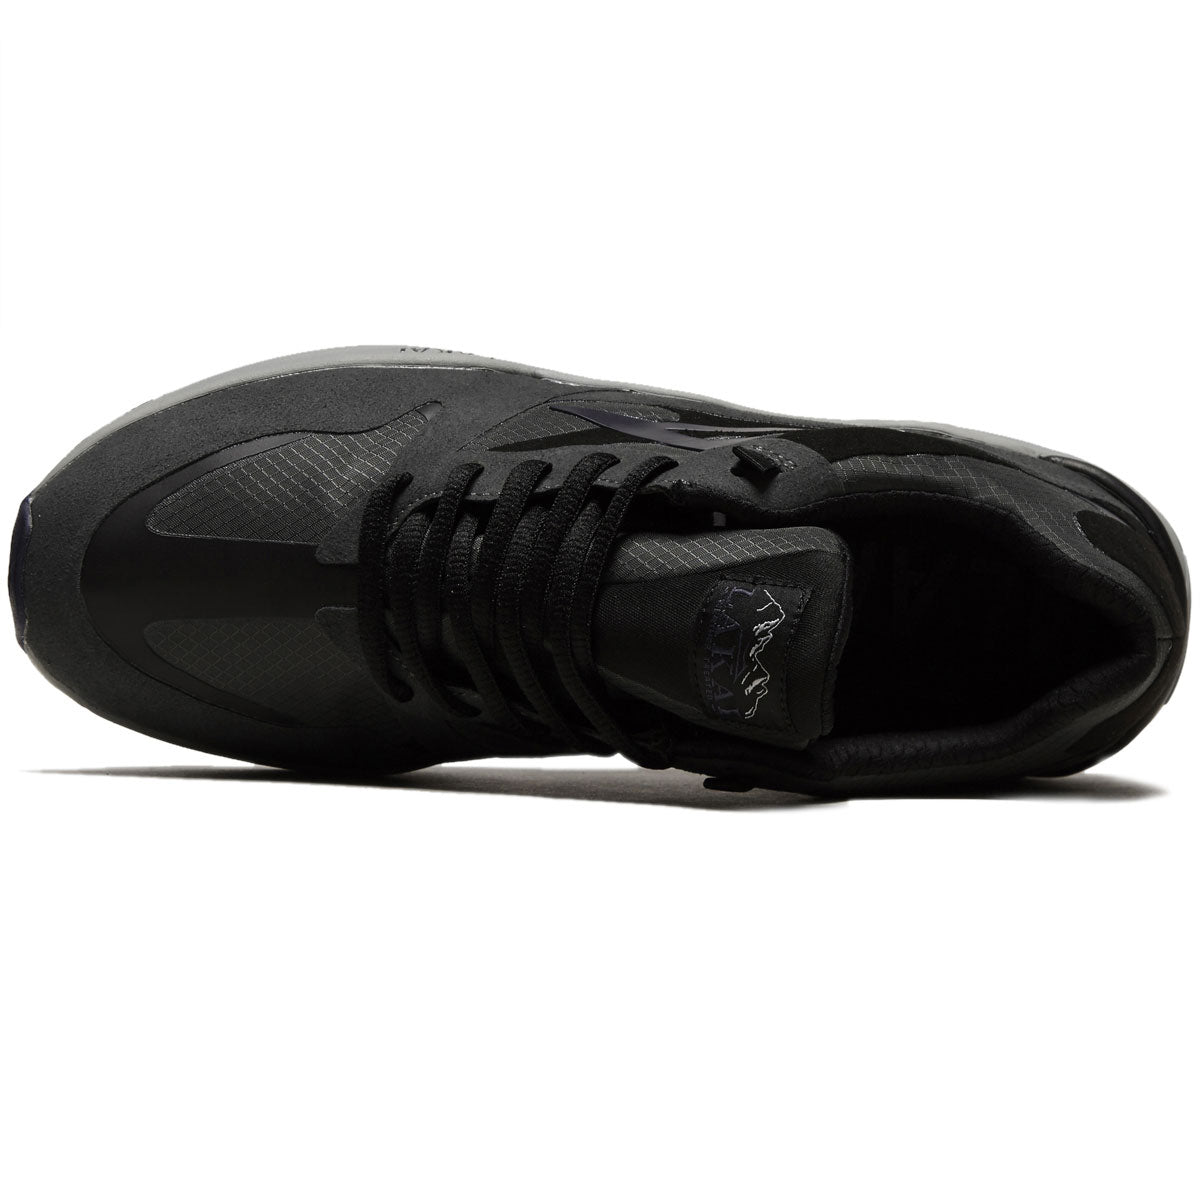 Lakai Evo 2.0 Shoes - Grey Suede image 3